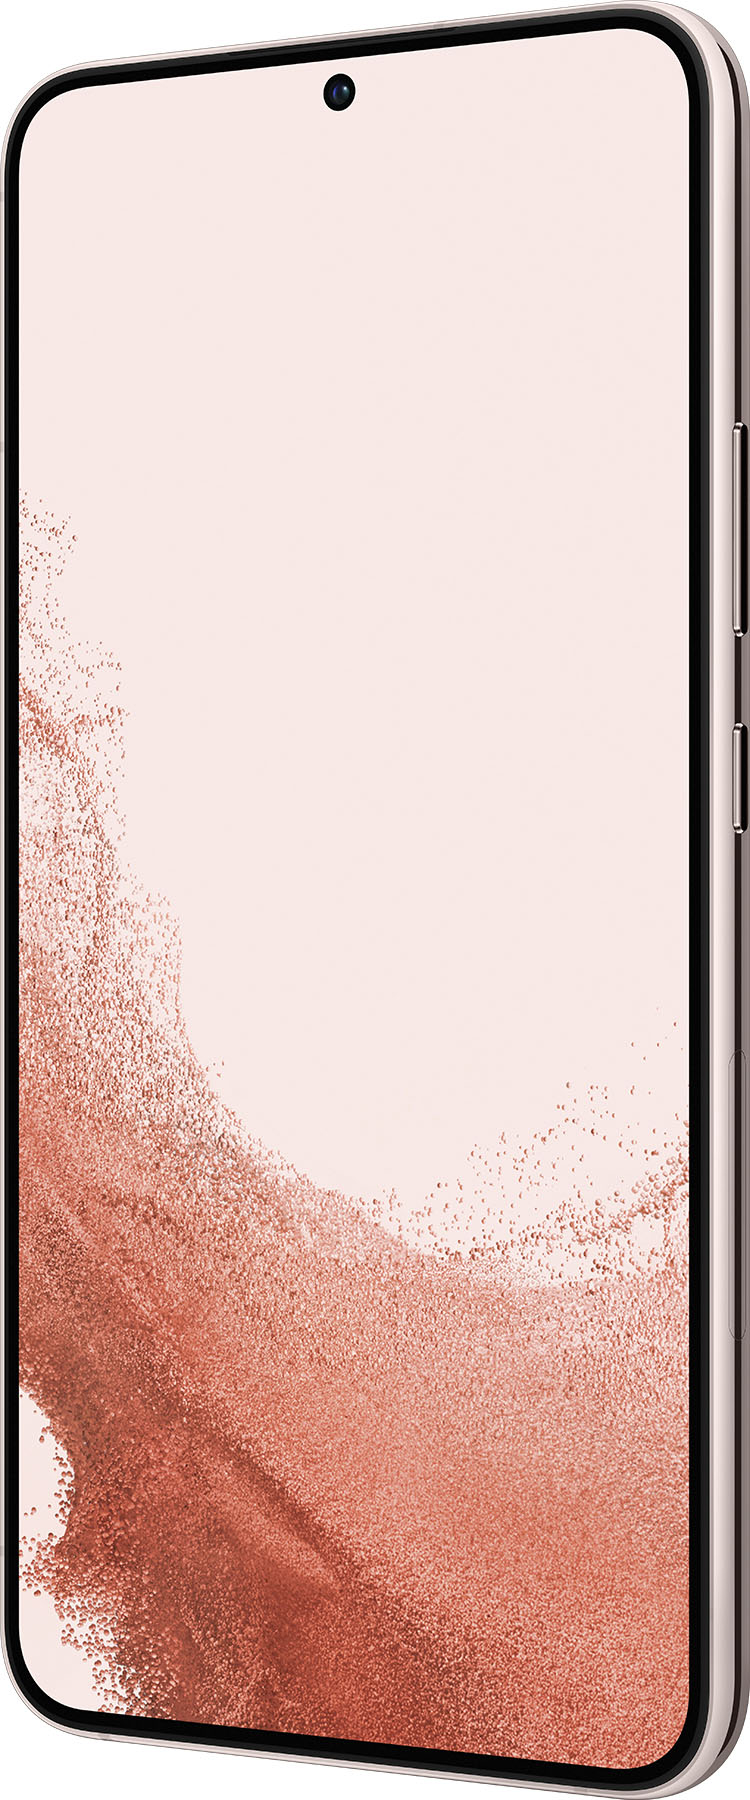 Left View: Verizon Samsung Galaxy S22 Plus 128 GB Pink Gold